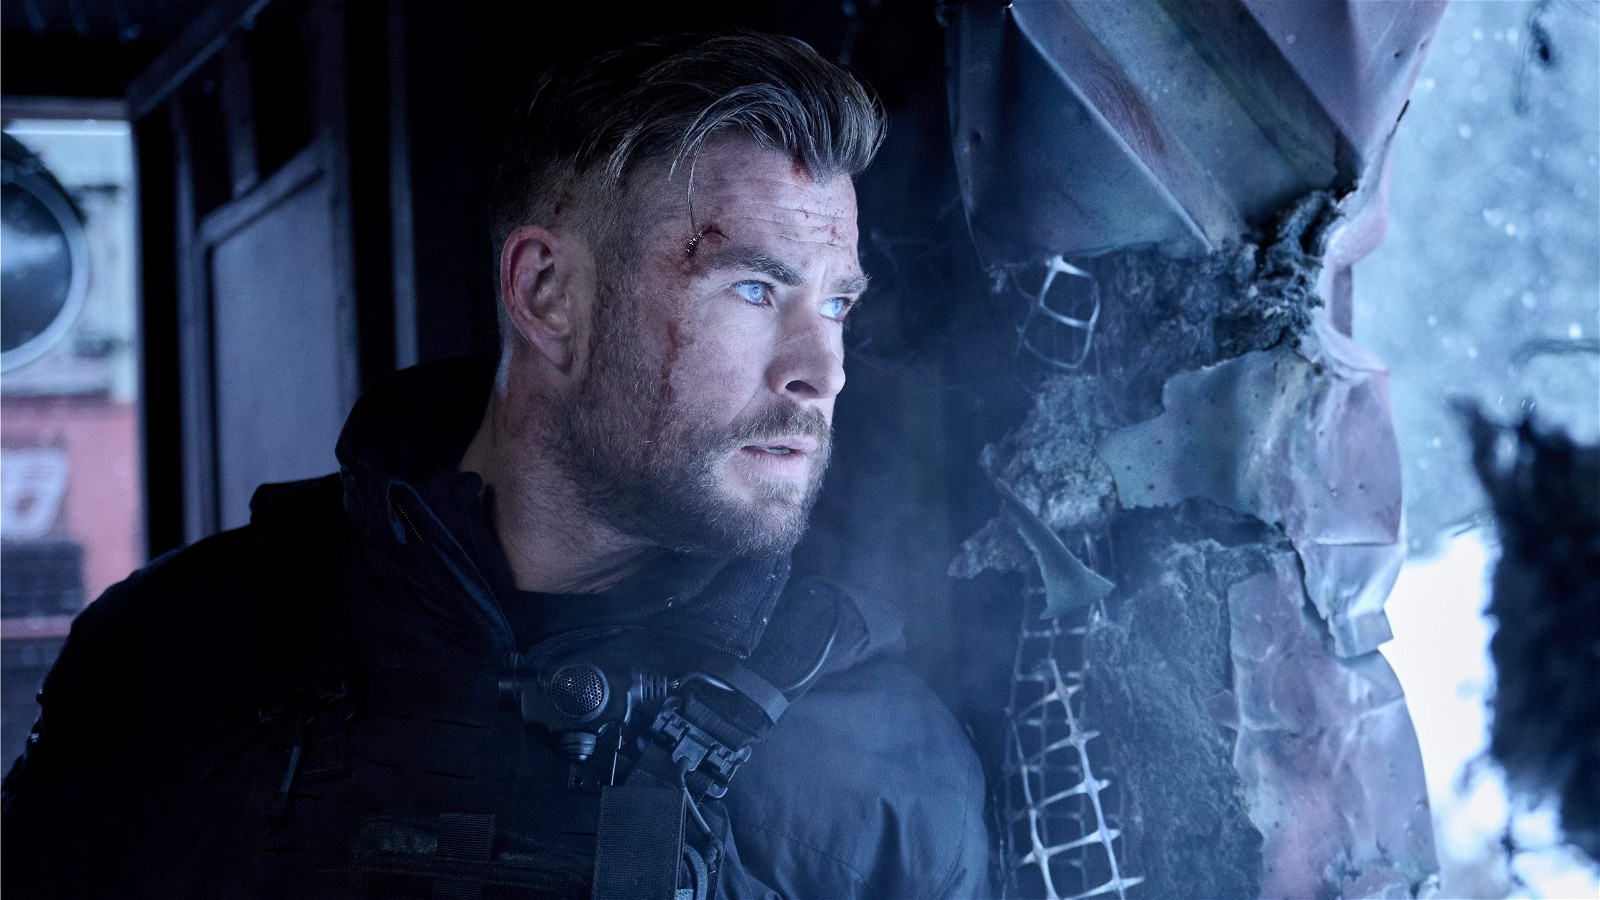 Chris Hemsworth as tayler Rake in Extraction 2